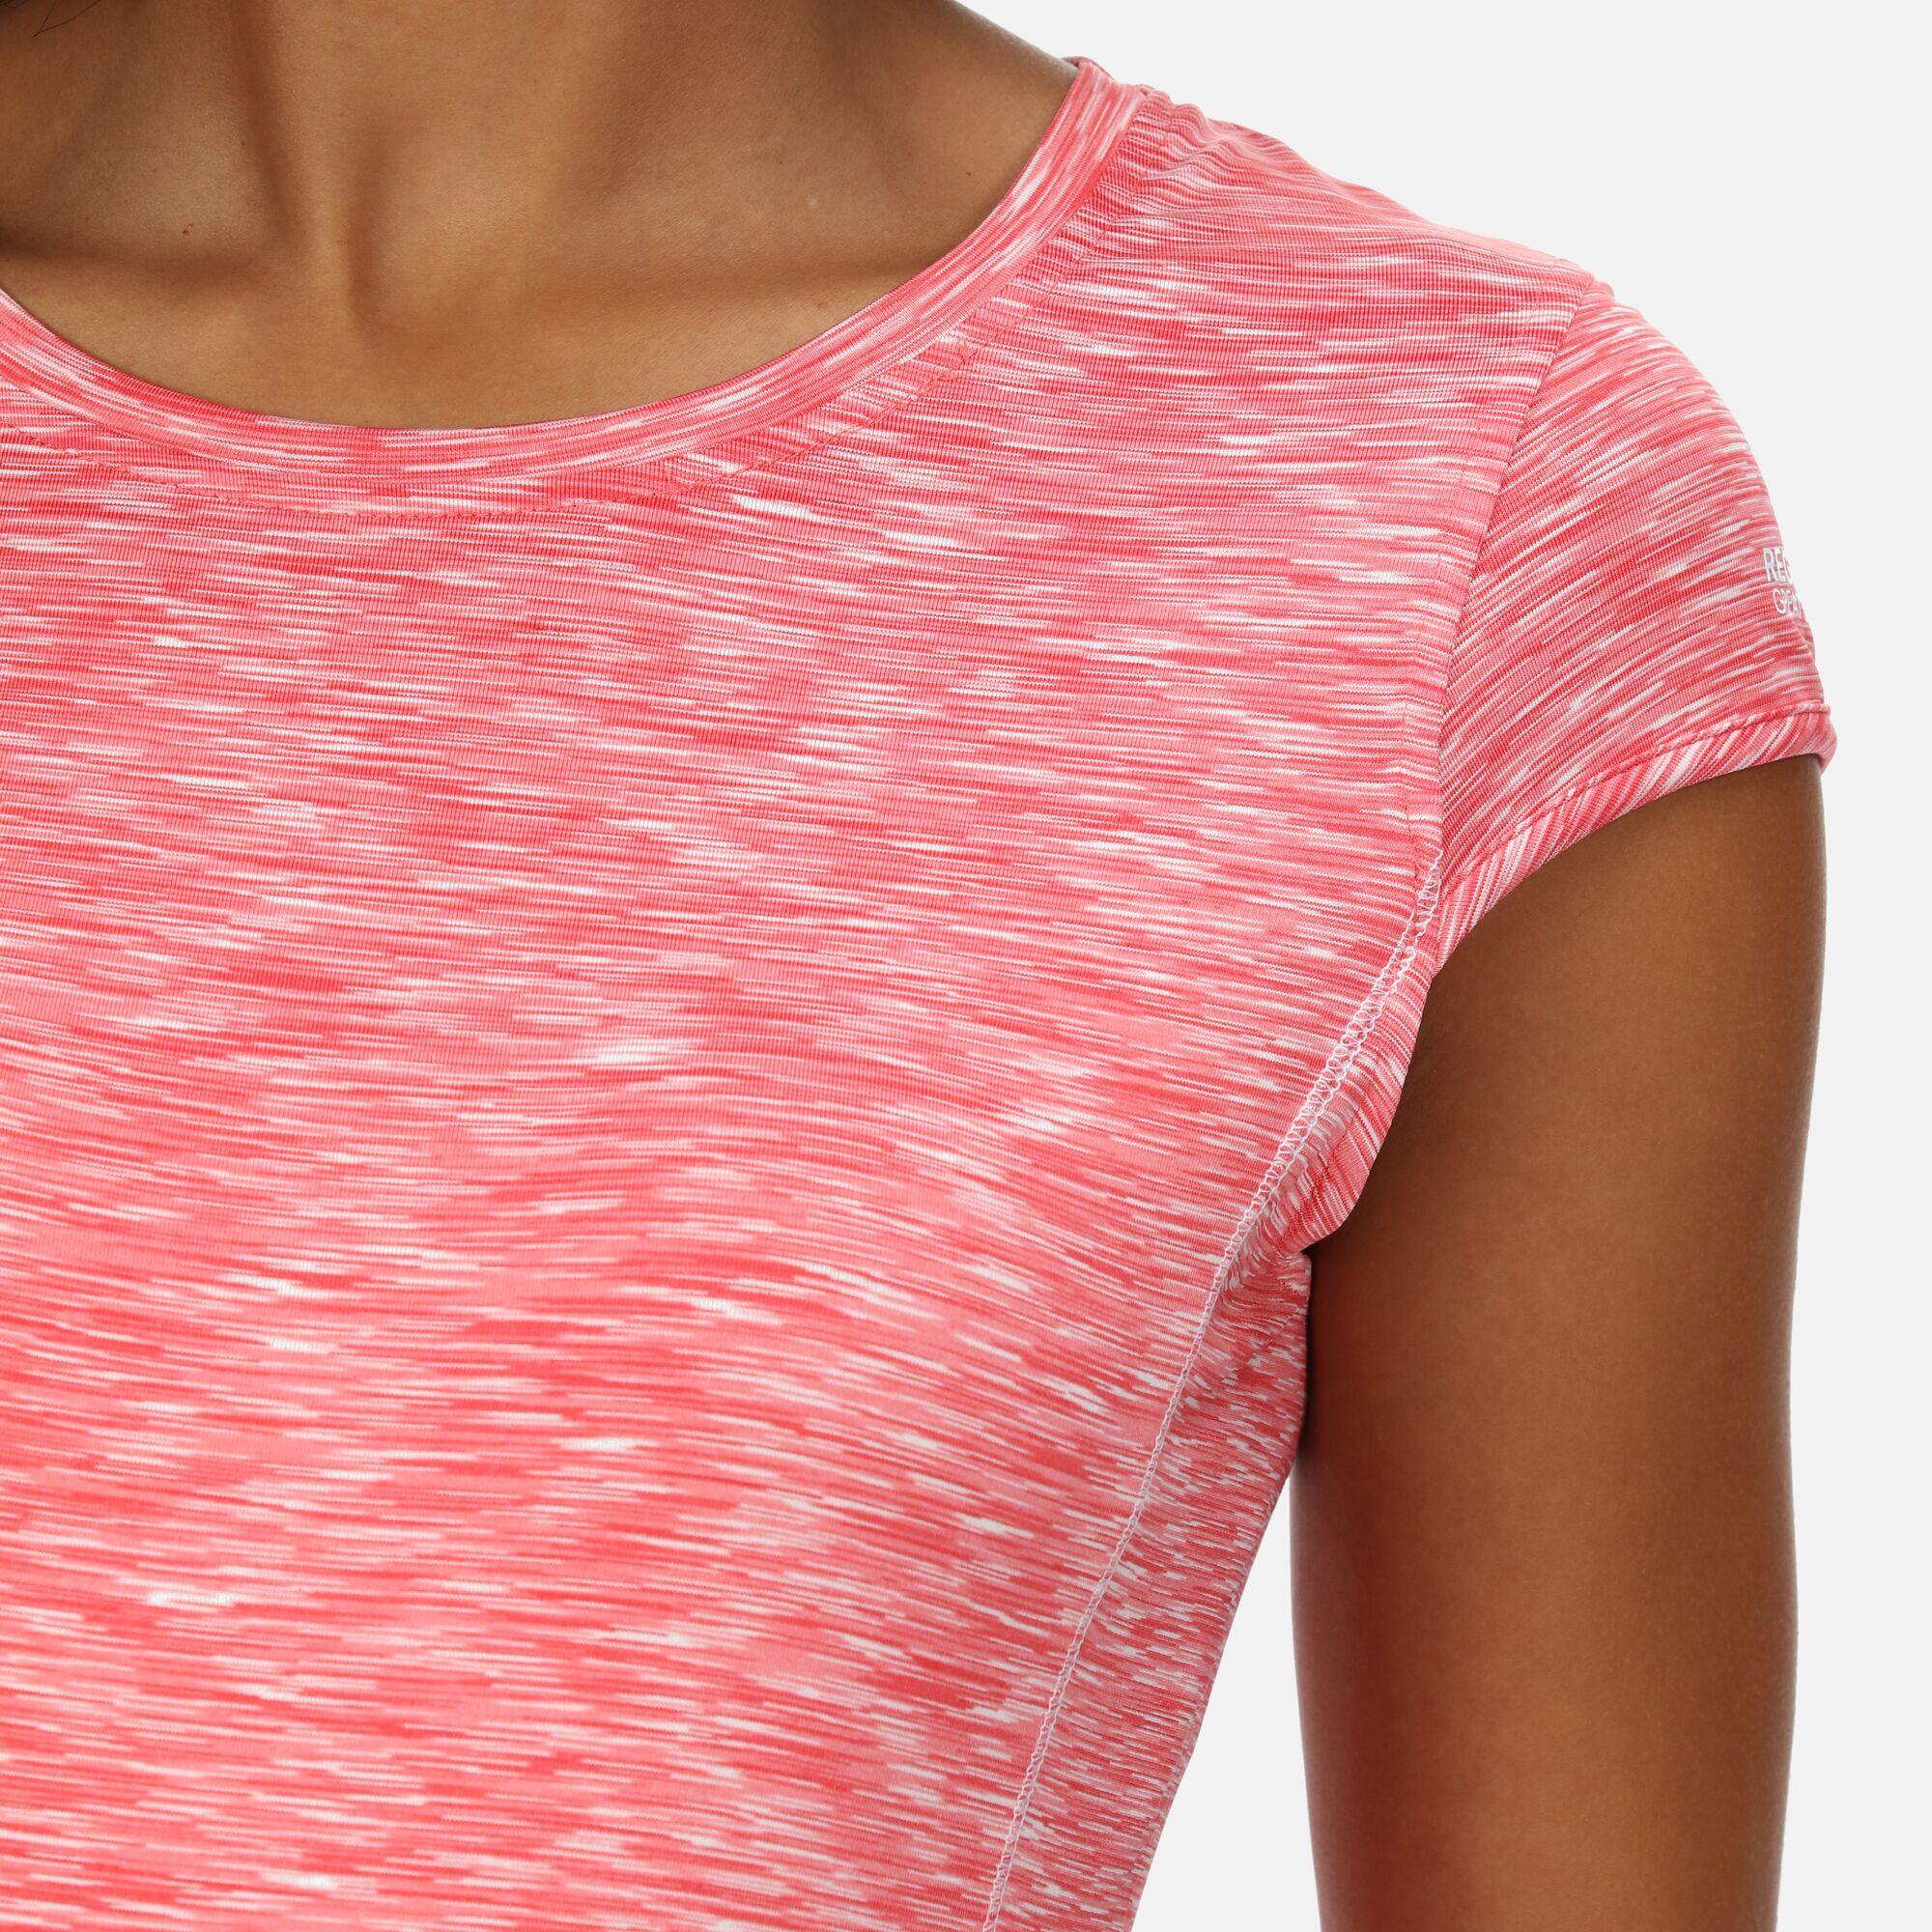 Hyperdimension II Women's Walking T-Shirt - Tropical Pink 4/7